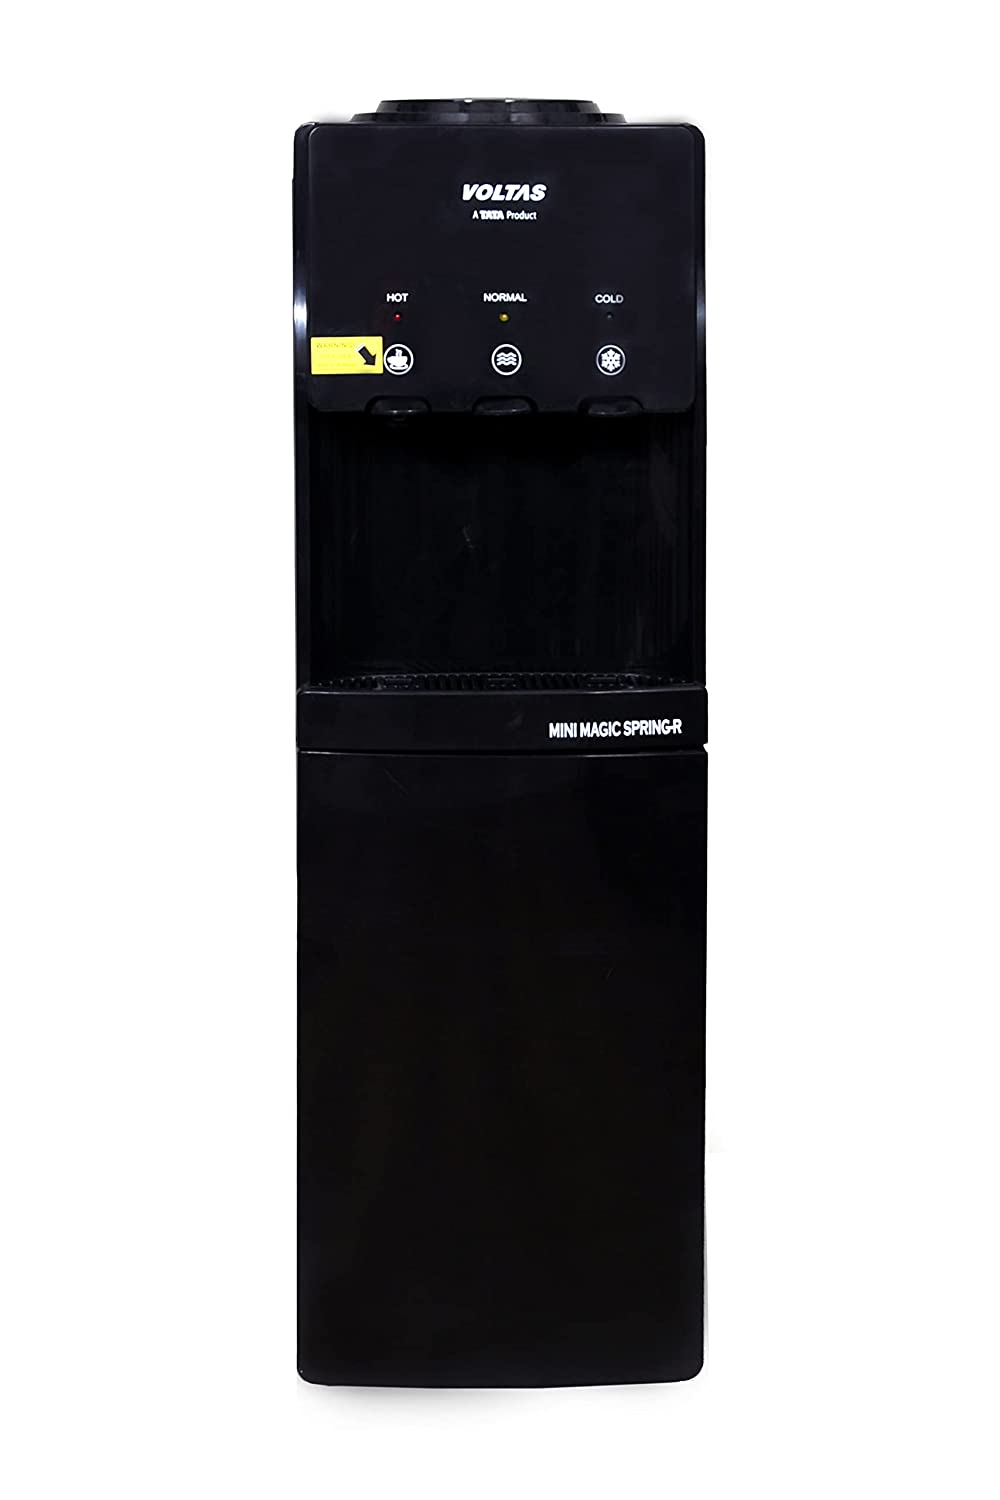 Voltas Floor Mounted Water Dispenser Minimagic SPRING R Plus Black - Mahajan Electronics Online